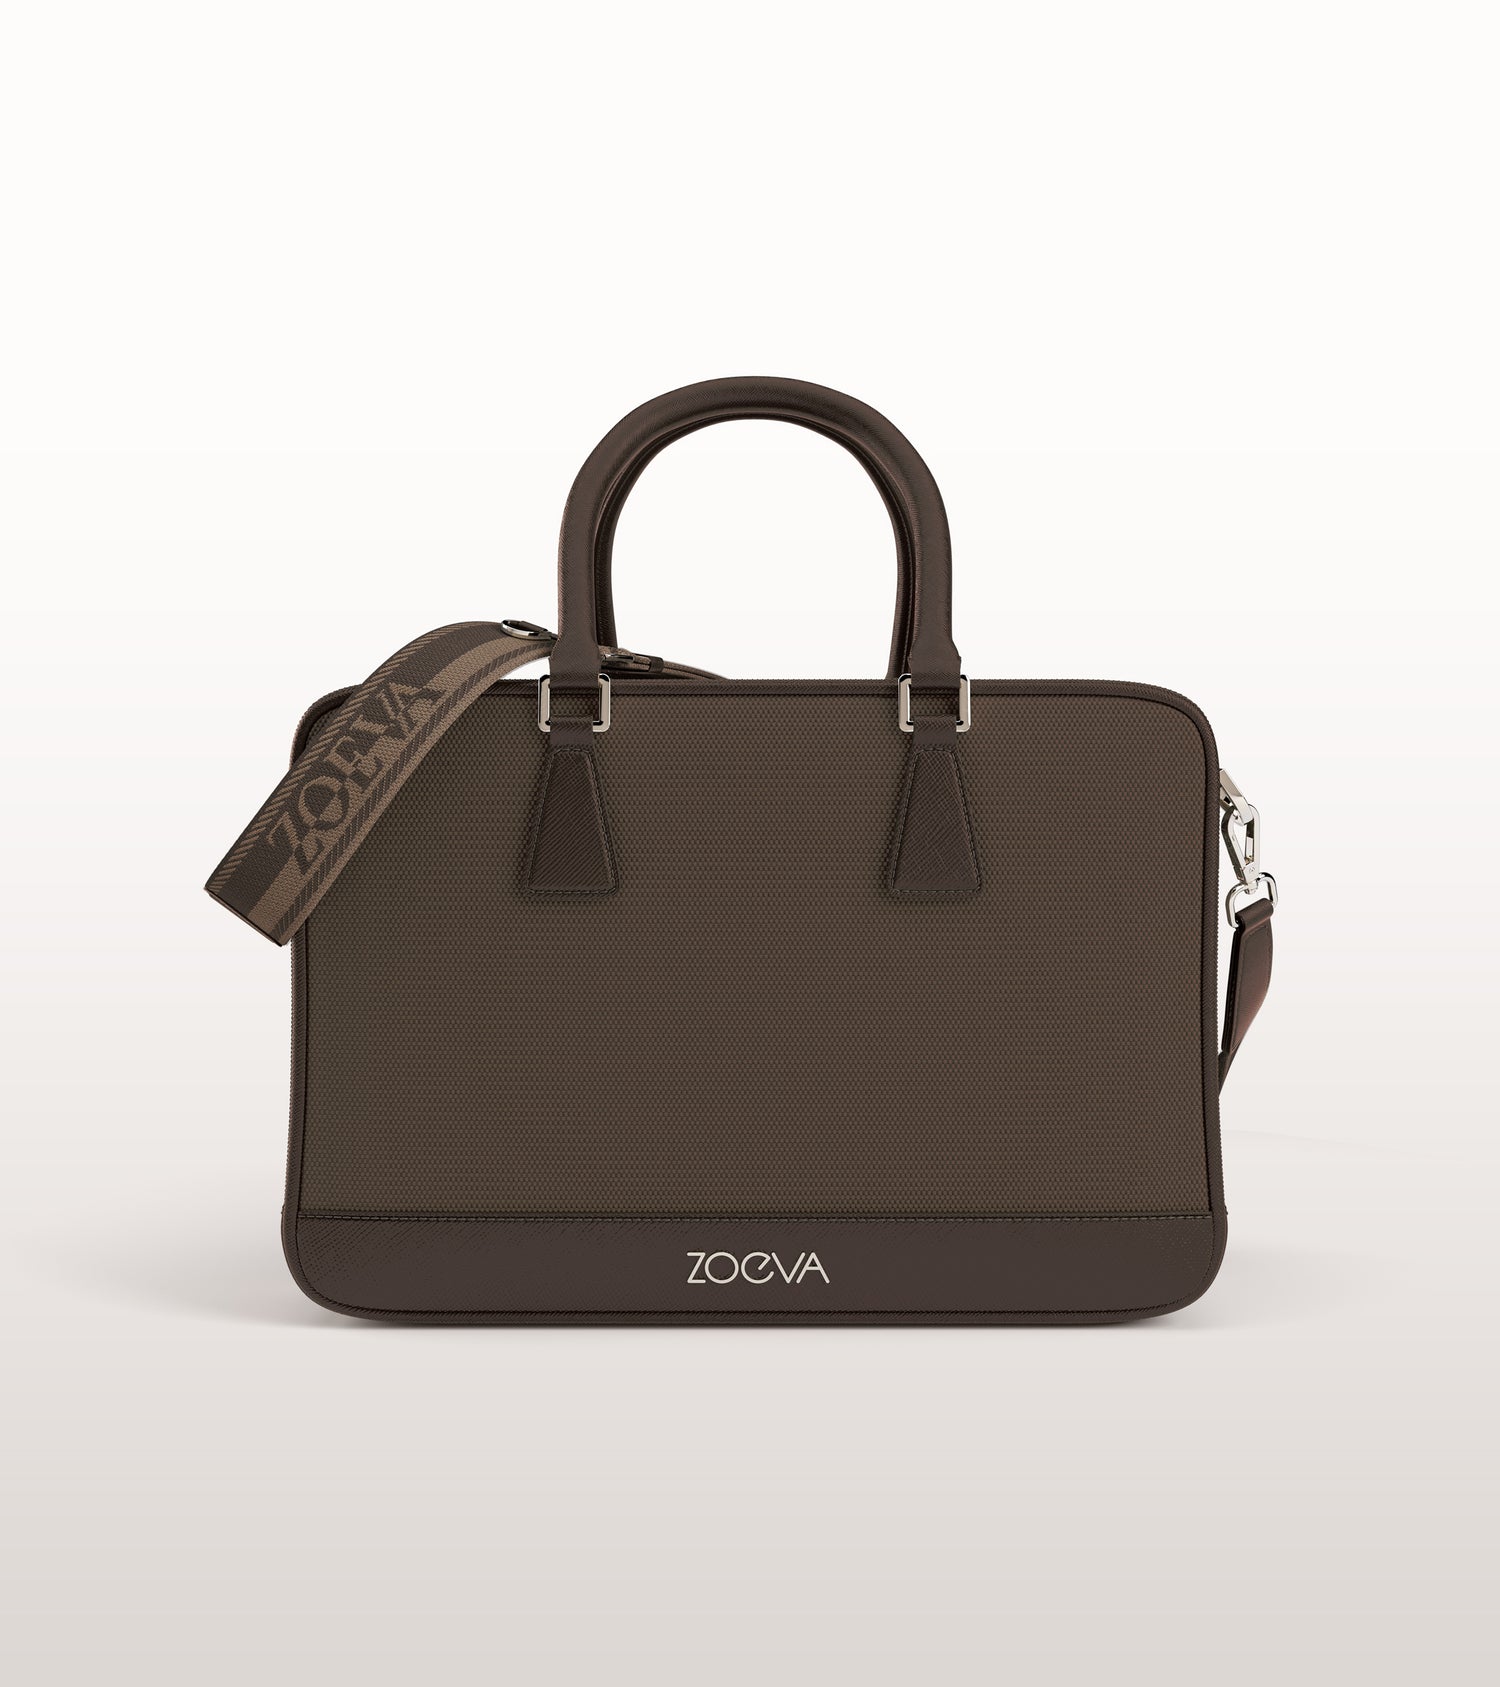 ZOEVA - The Zoe Bag (Chocolate) - ACCESSORIES